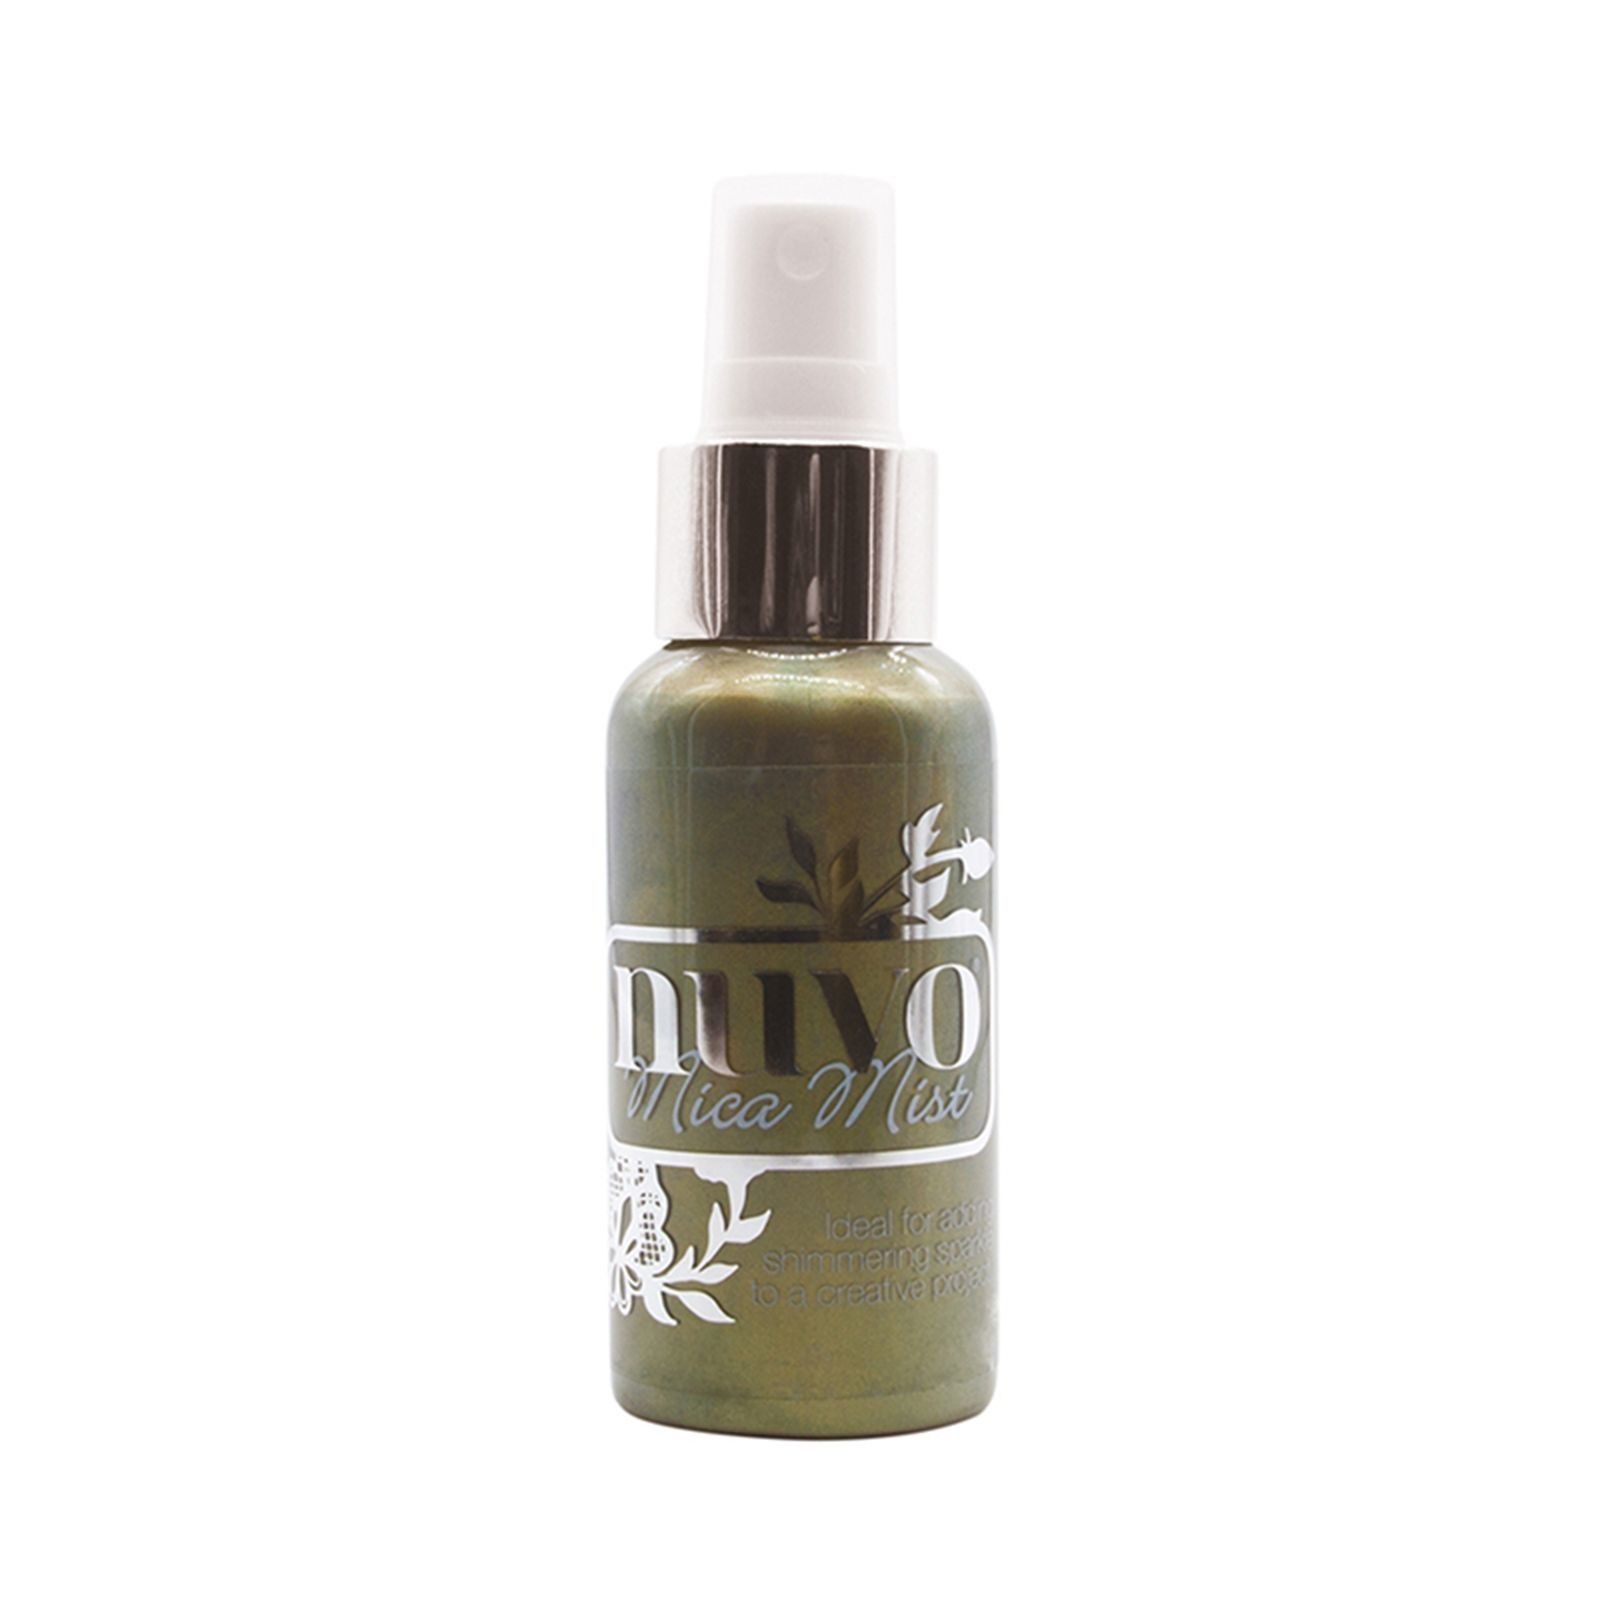 Mica mist, Nuvo, Wild Olive, 80ml